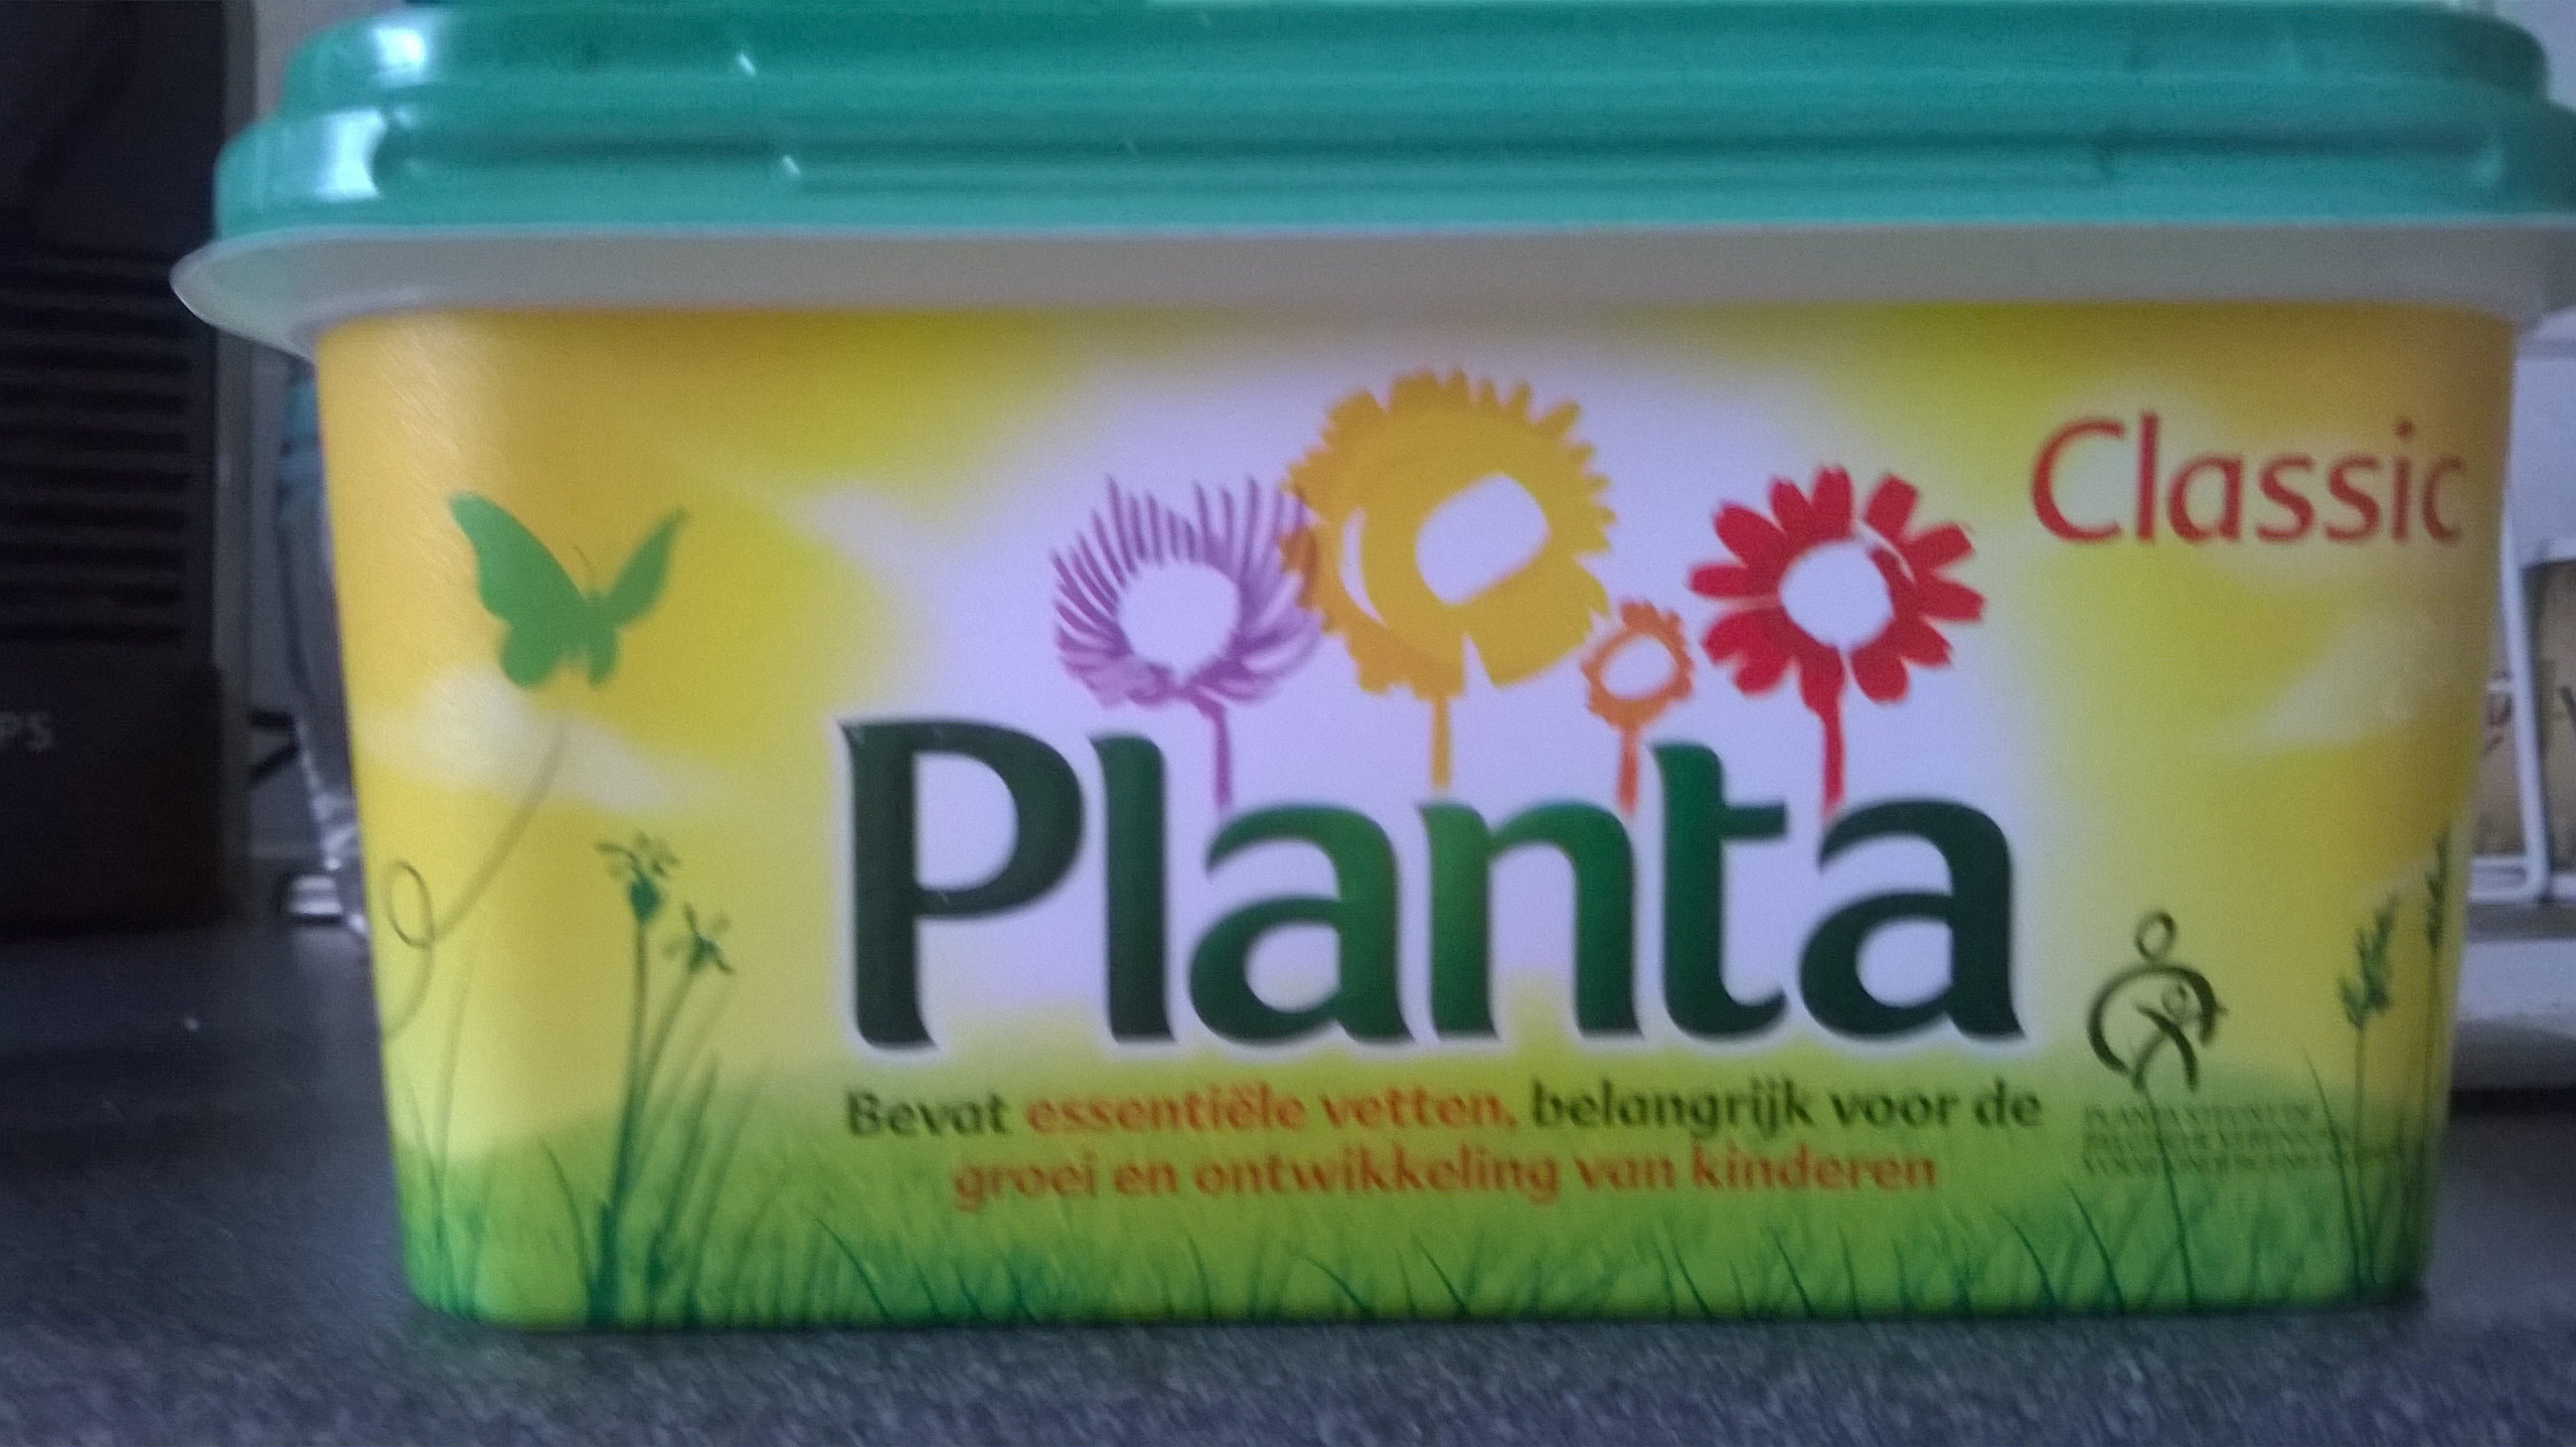 Planta Classic - Product - fr